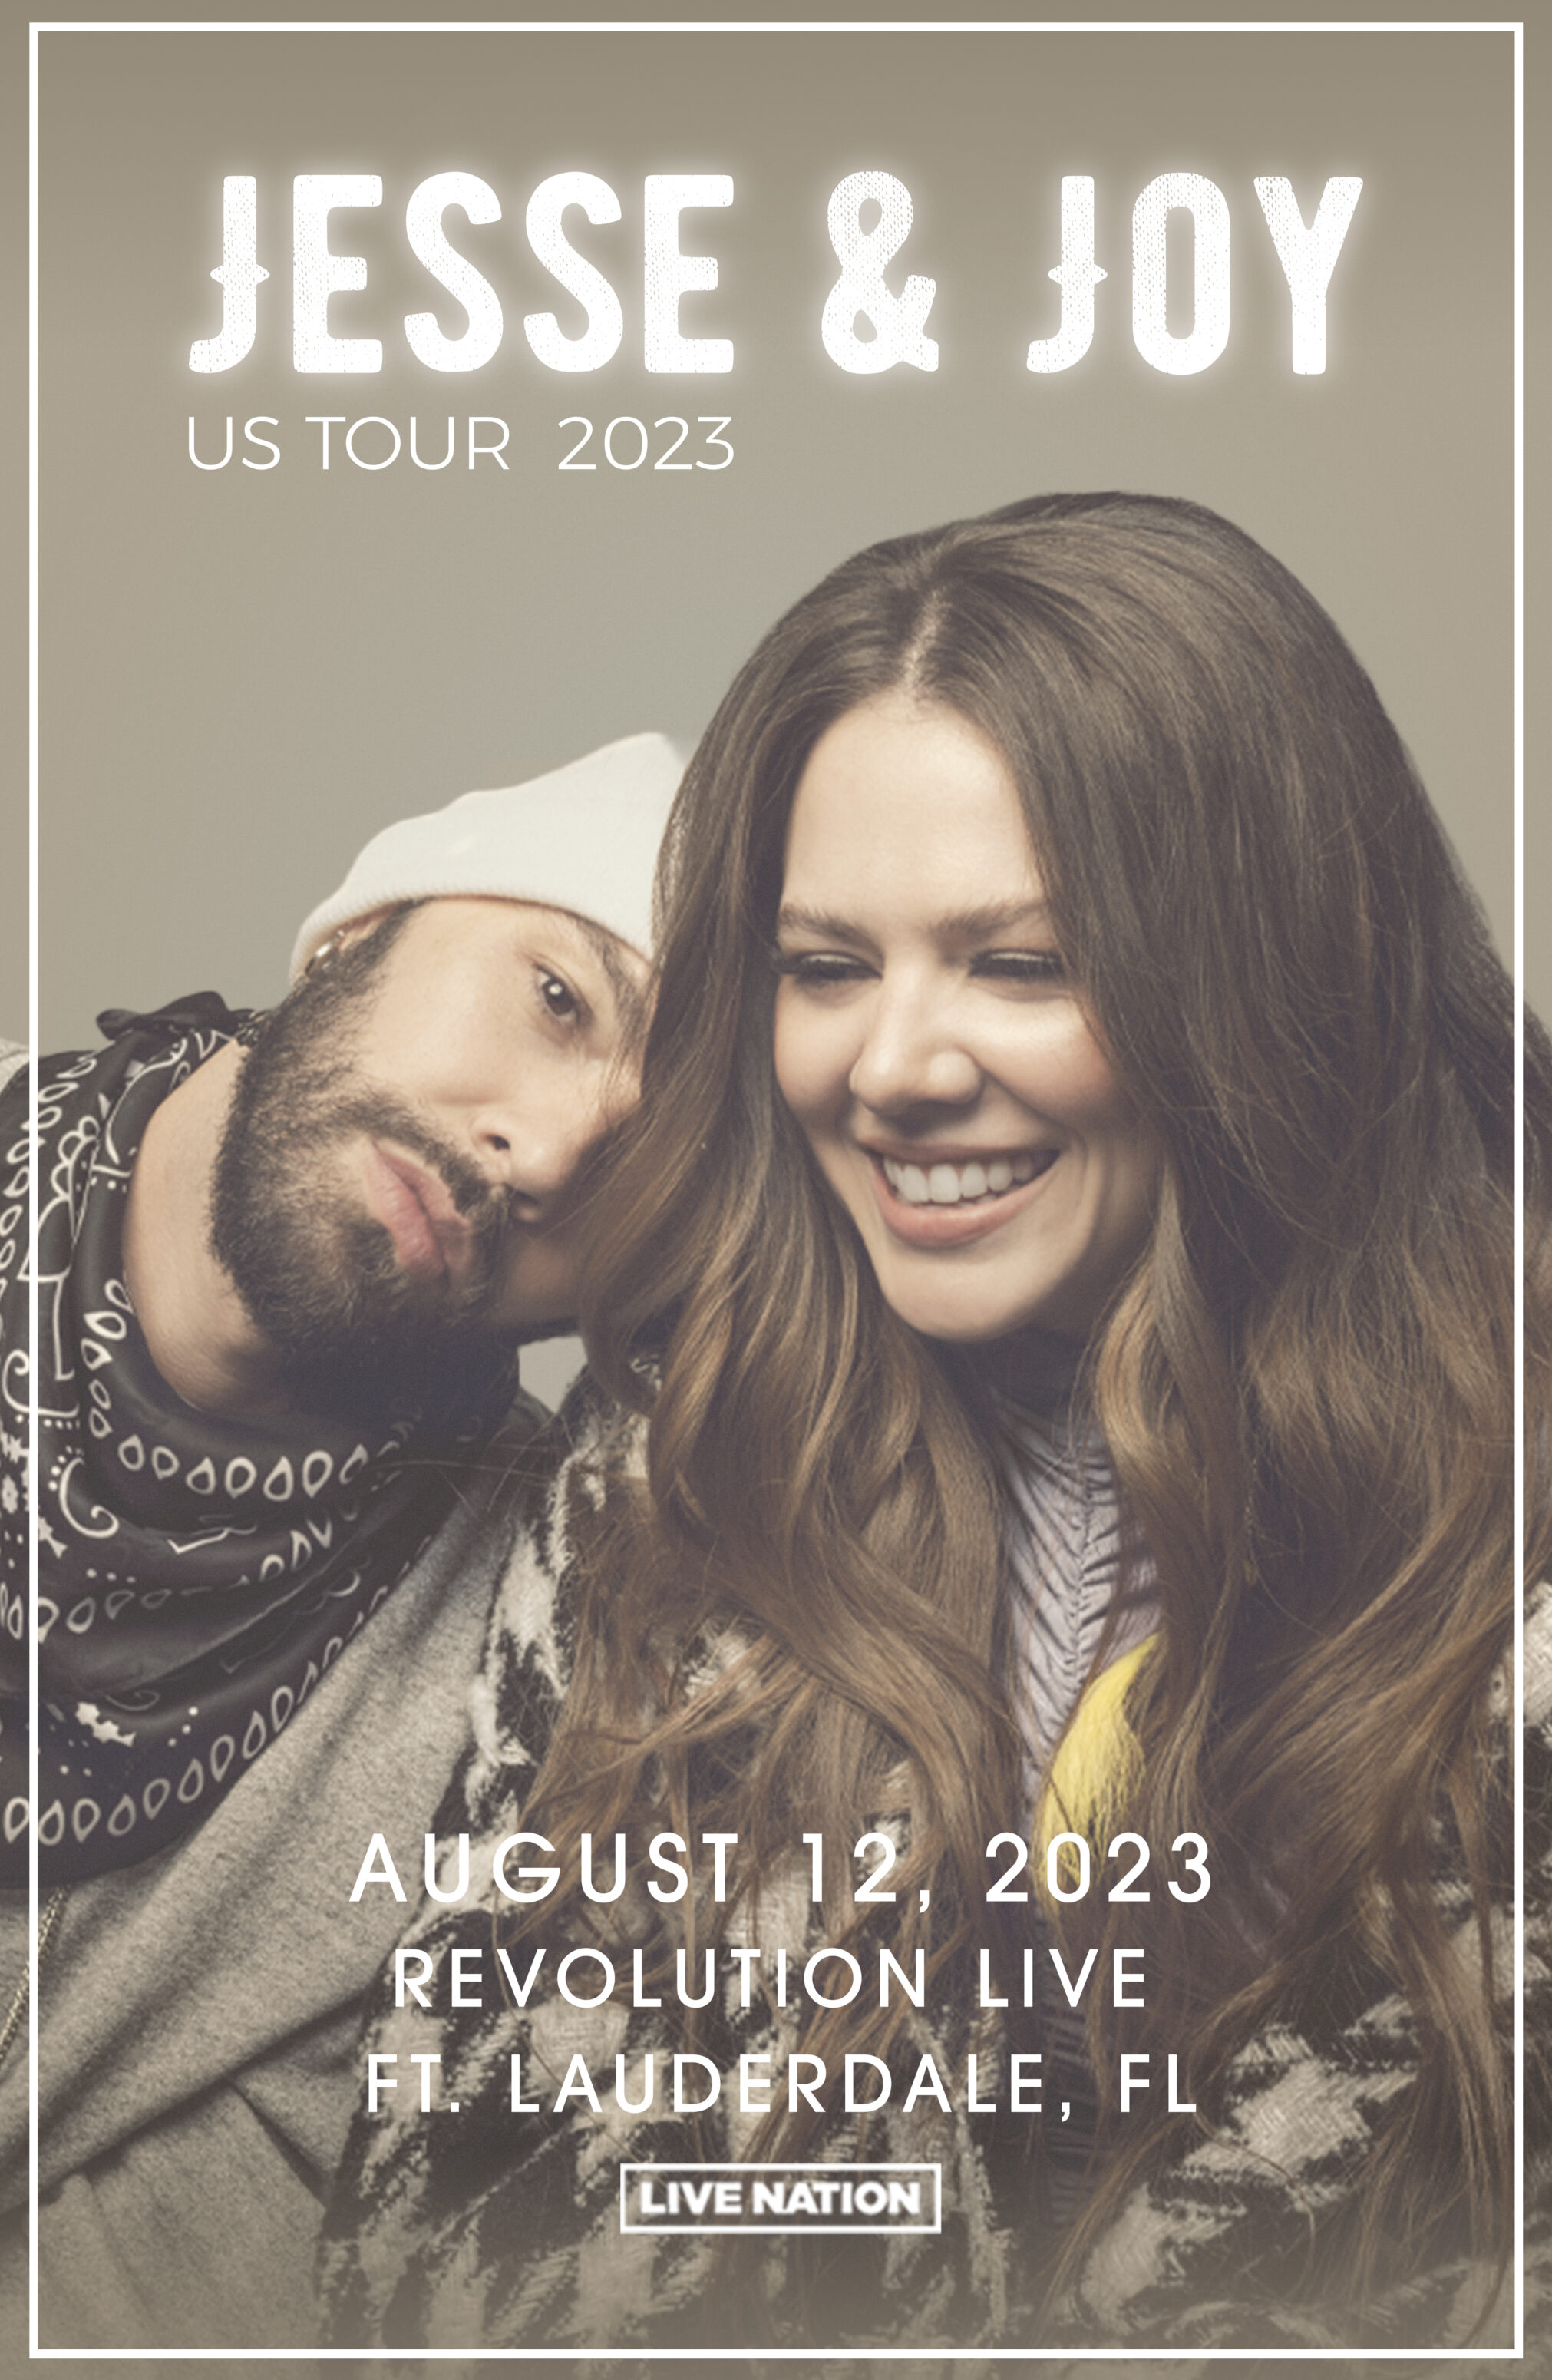 Jesse & Joy US Tour 2023